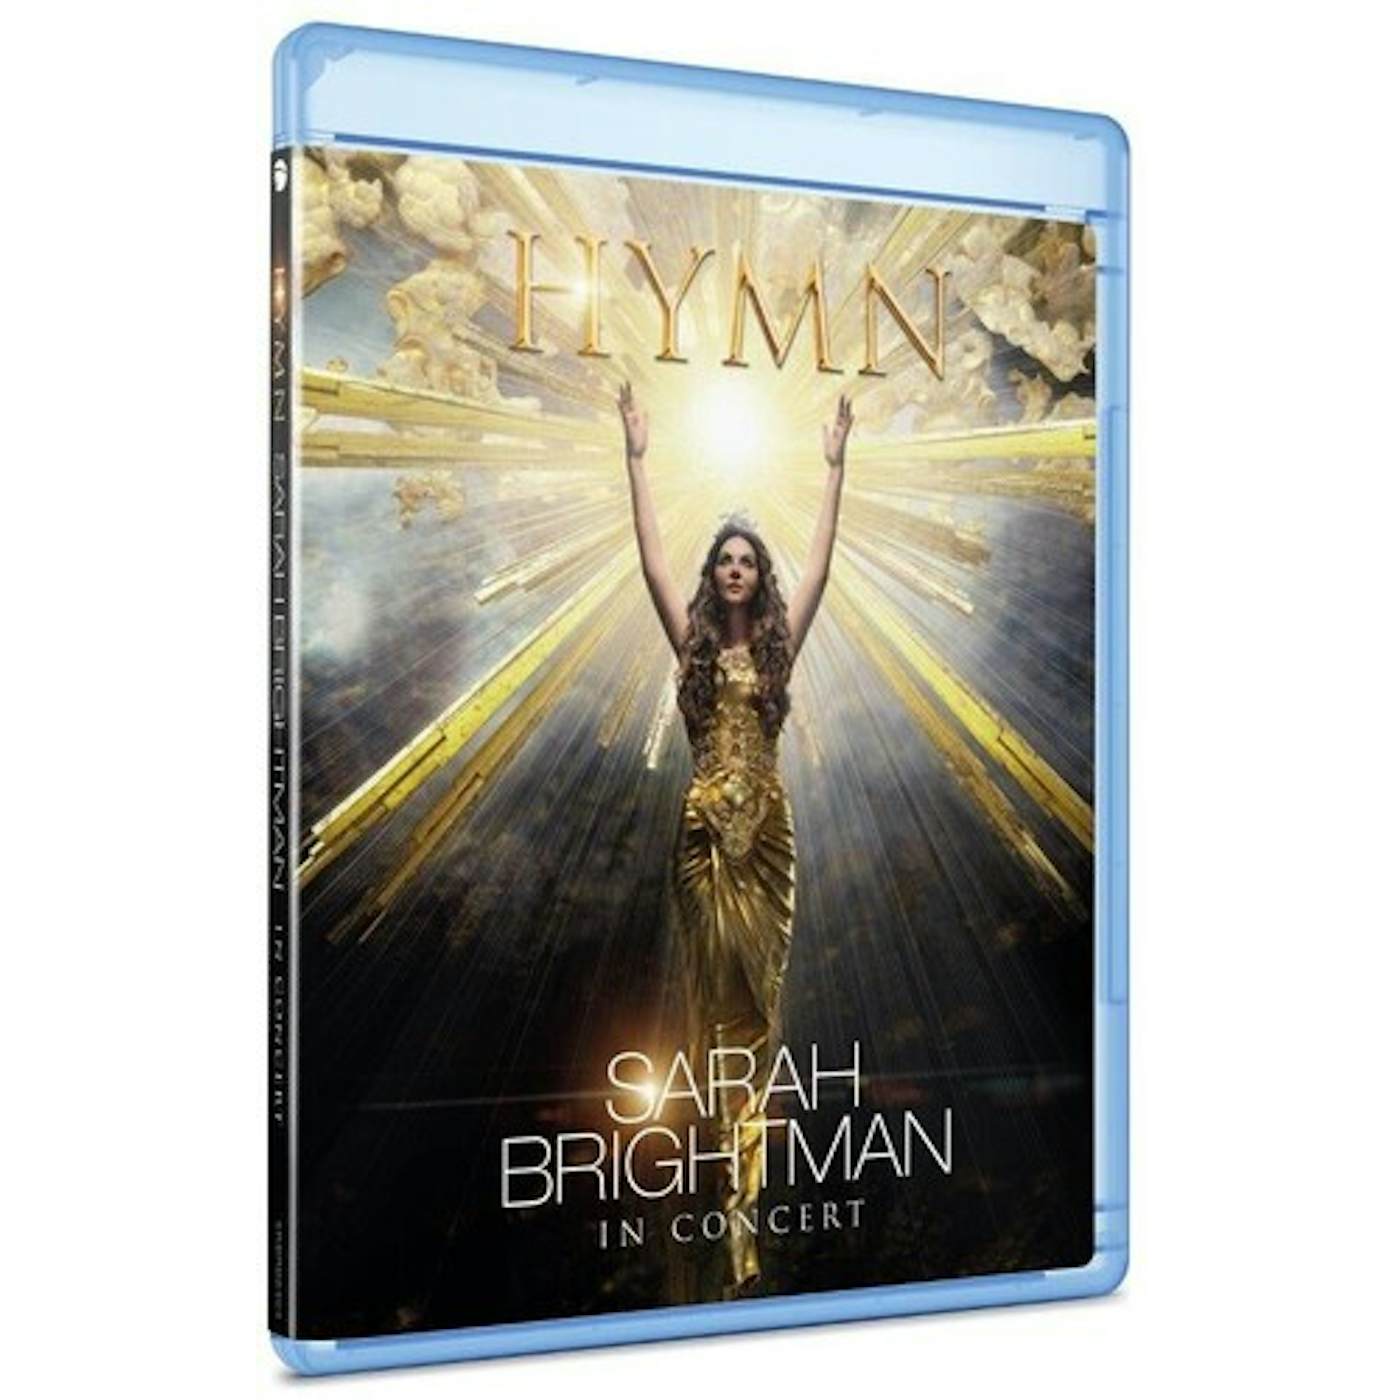 Sarah Brightman HYMN IN CONCERT Blu-ray